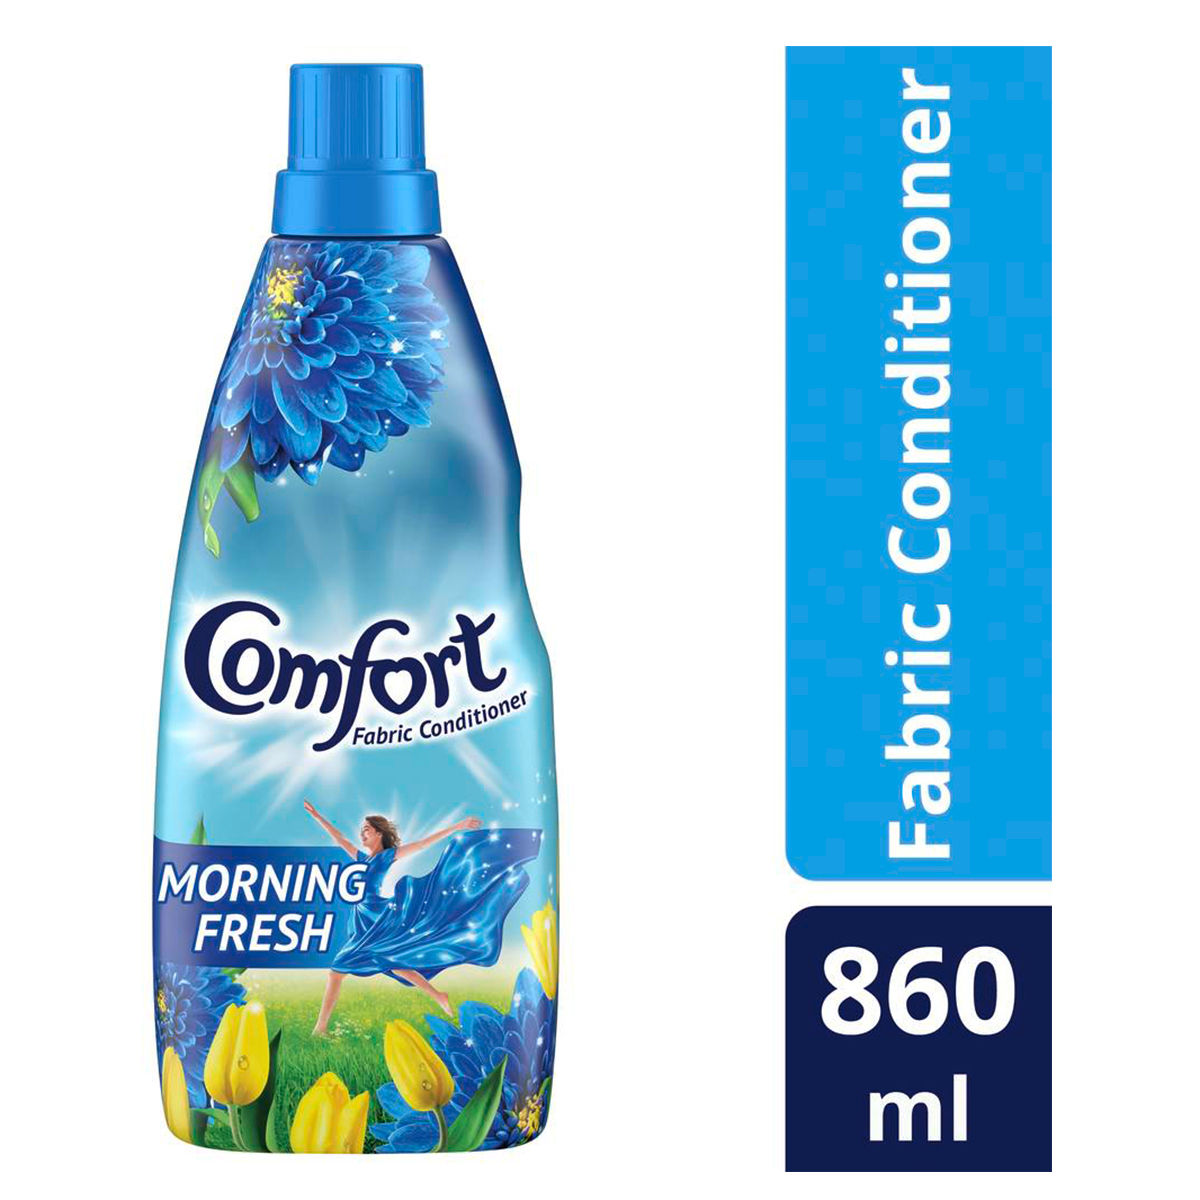 Buy Comfort Morning Fresh Fabric Conditioner, 860 ml Online